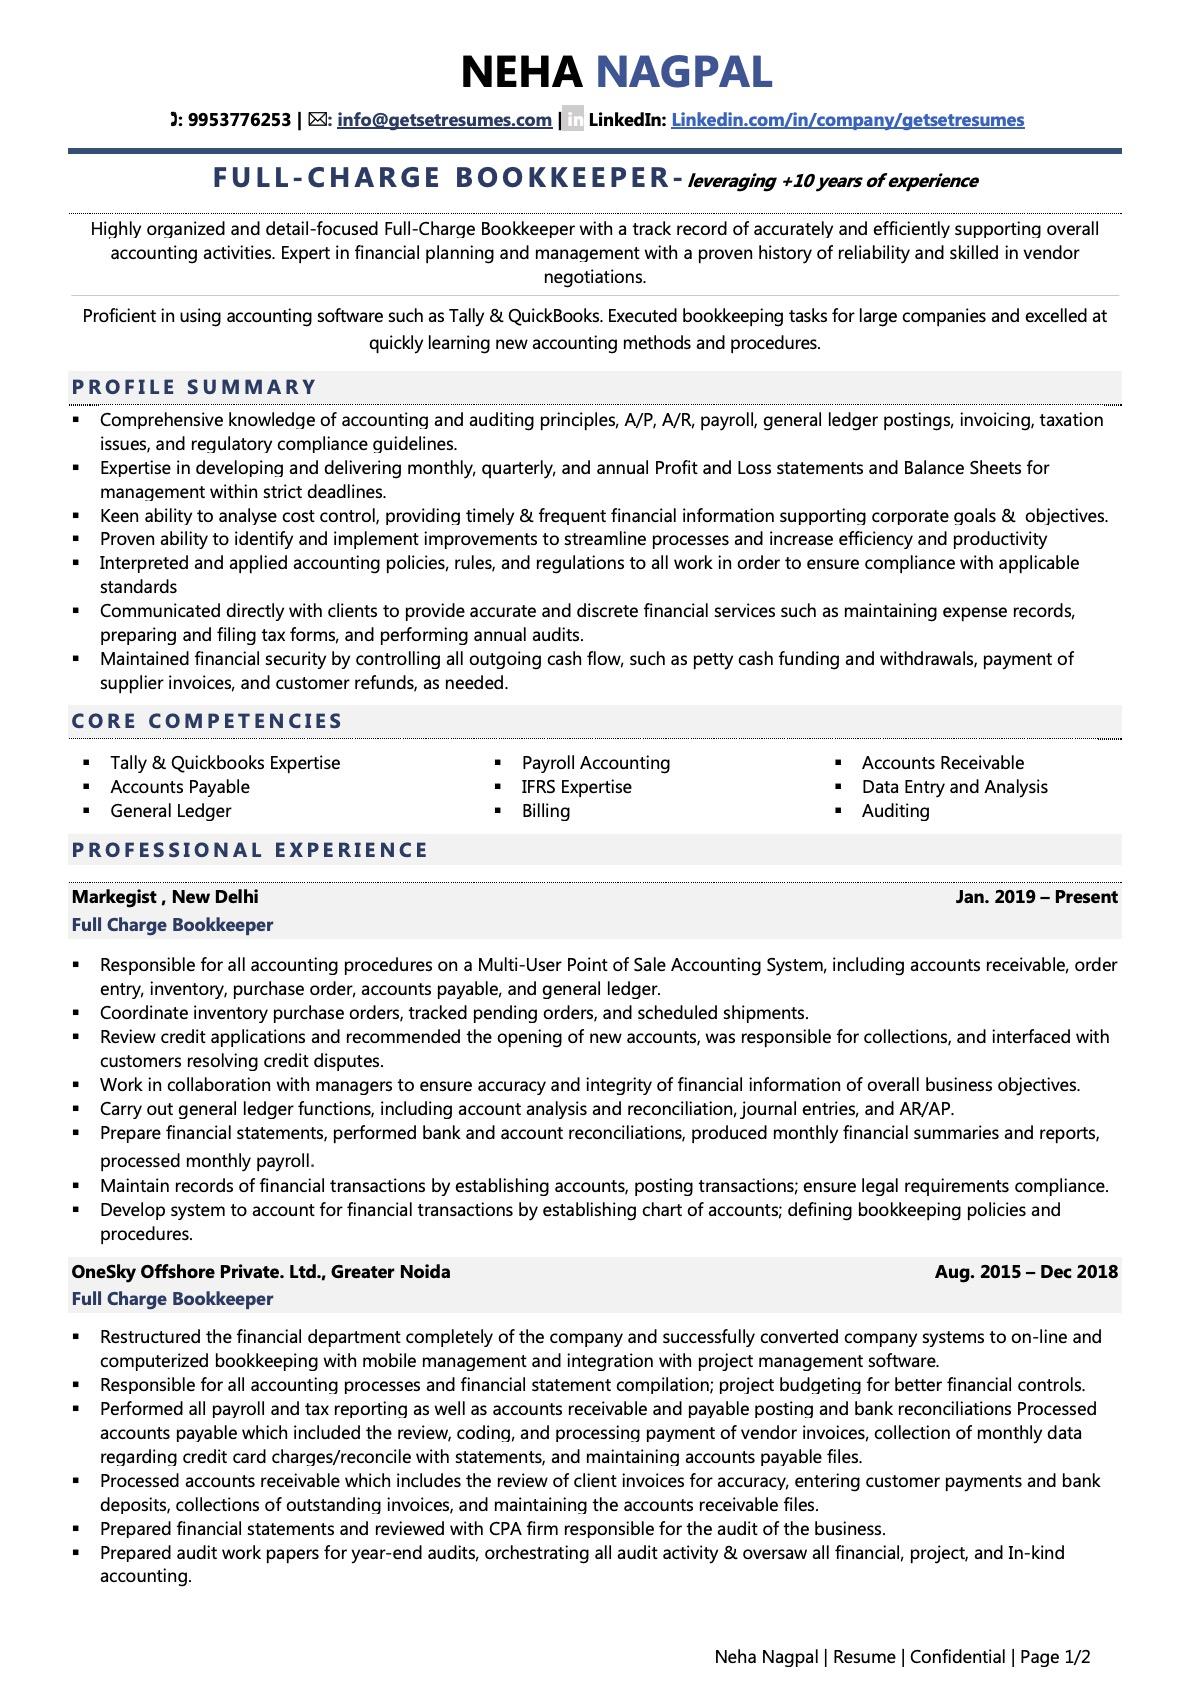 functional resume sample for bookkeeper